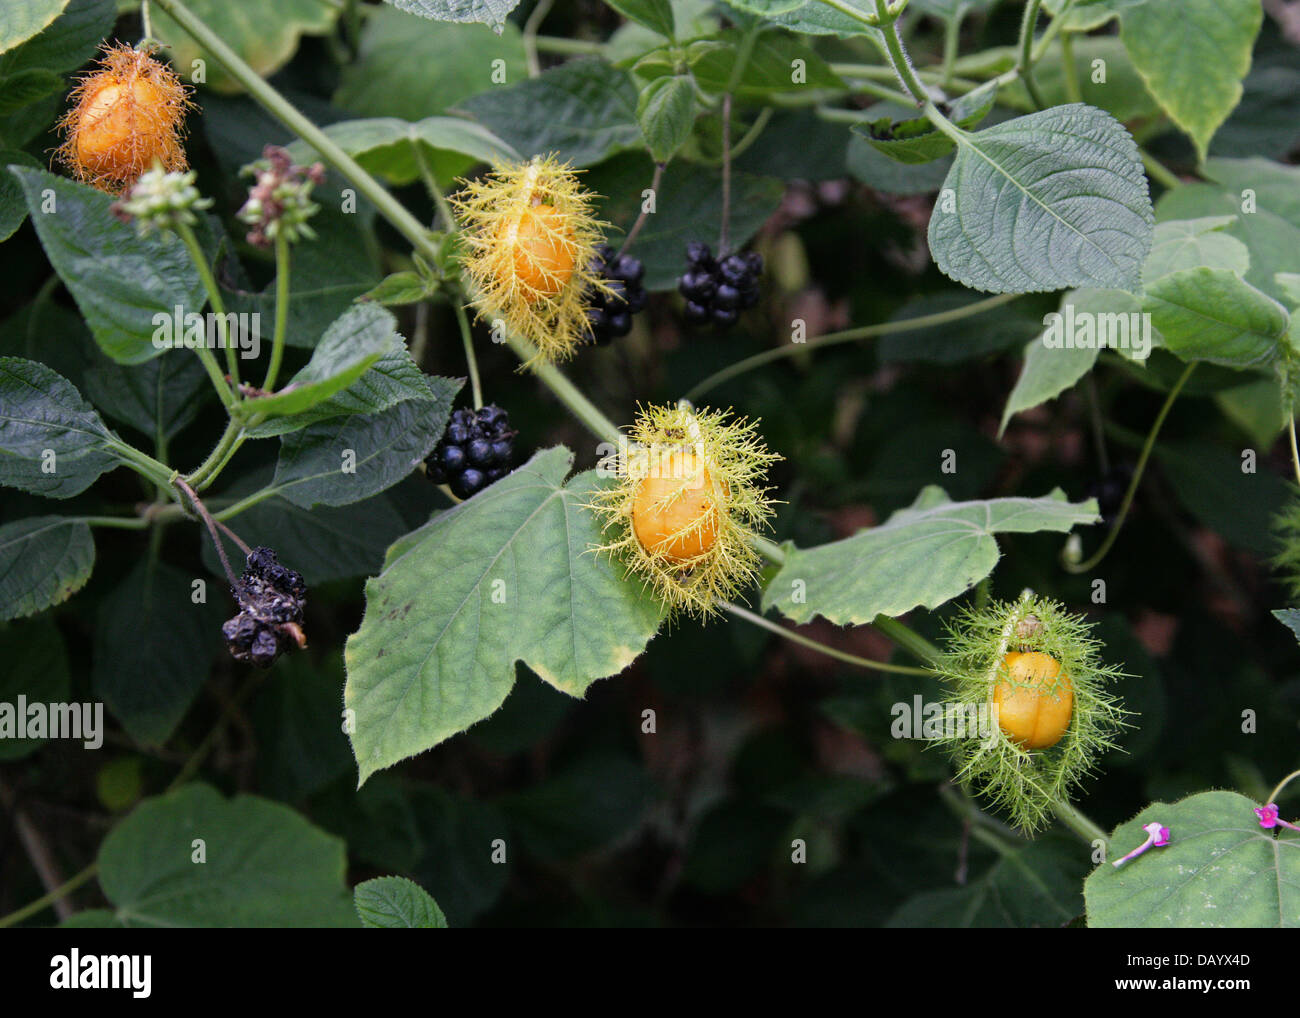 Bush Passion fruit, Wild Maracuja, Wild Water Lemon, Stinking Passionflower, Love-in-a-mist, Passiflora foetida, Passifloraceae. Stock Photo